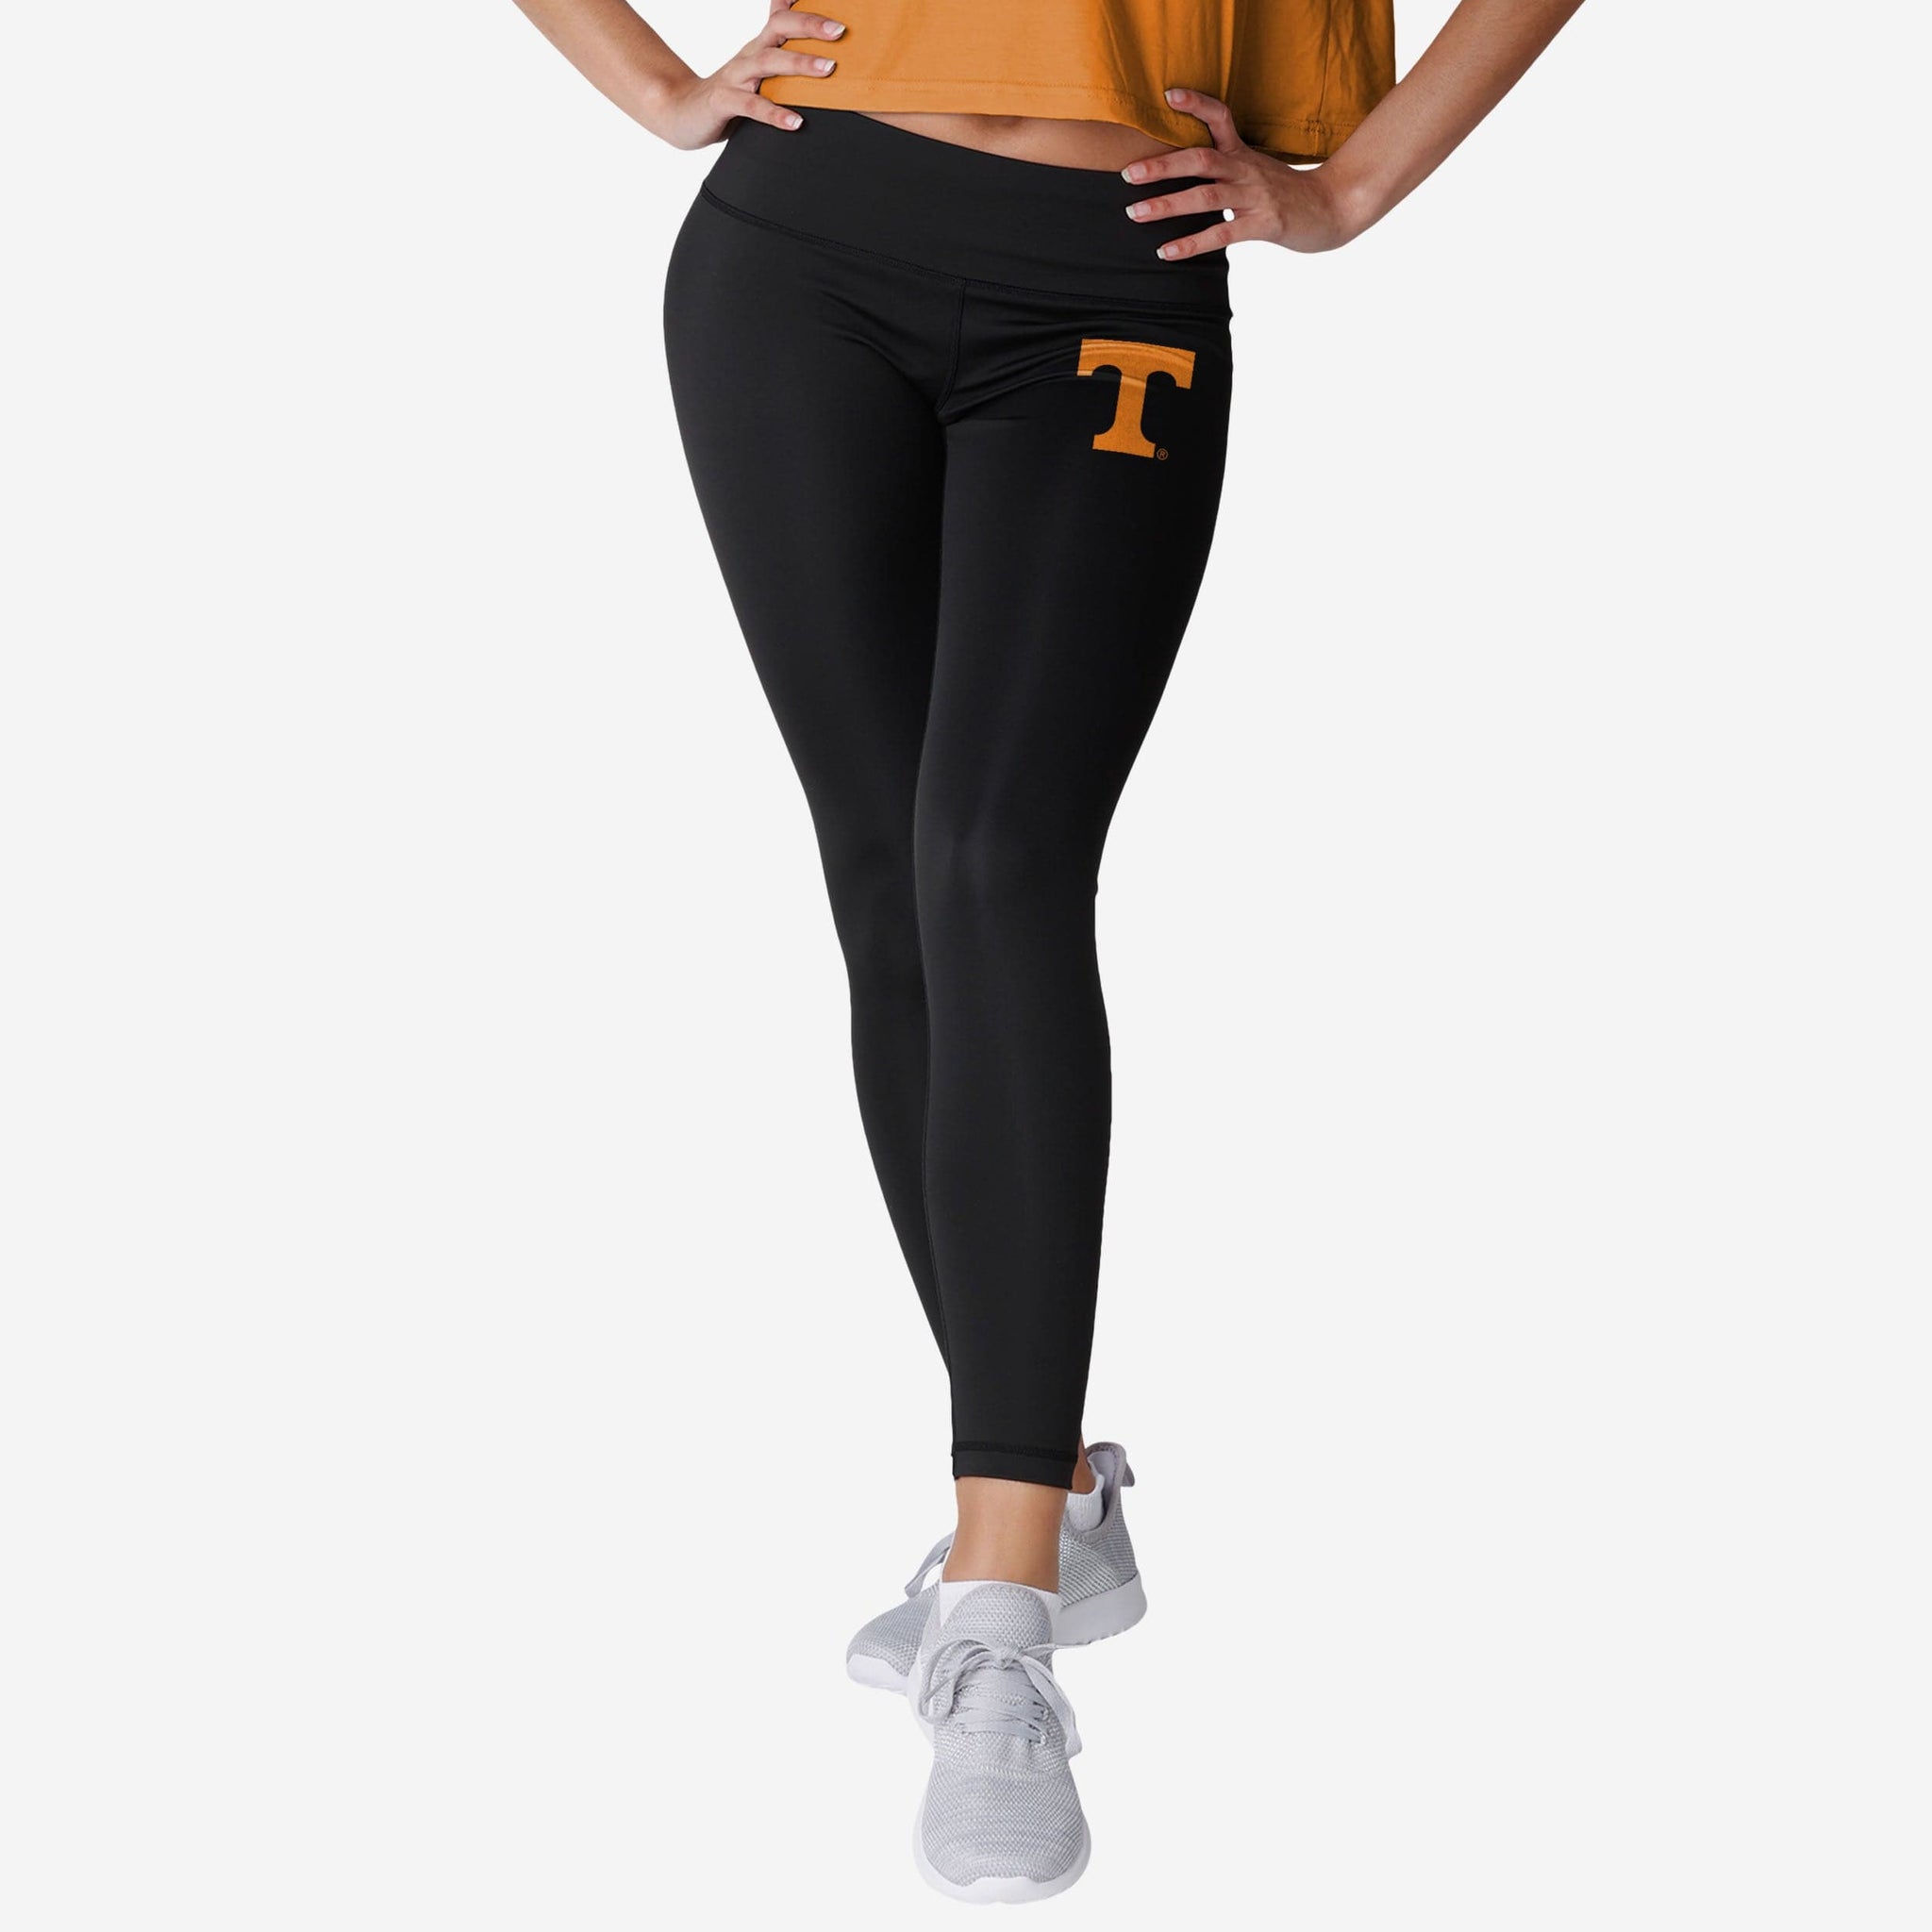 FOCO Tennessee Volunteers Womens Calf Logo Black Legging, Size: L